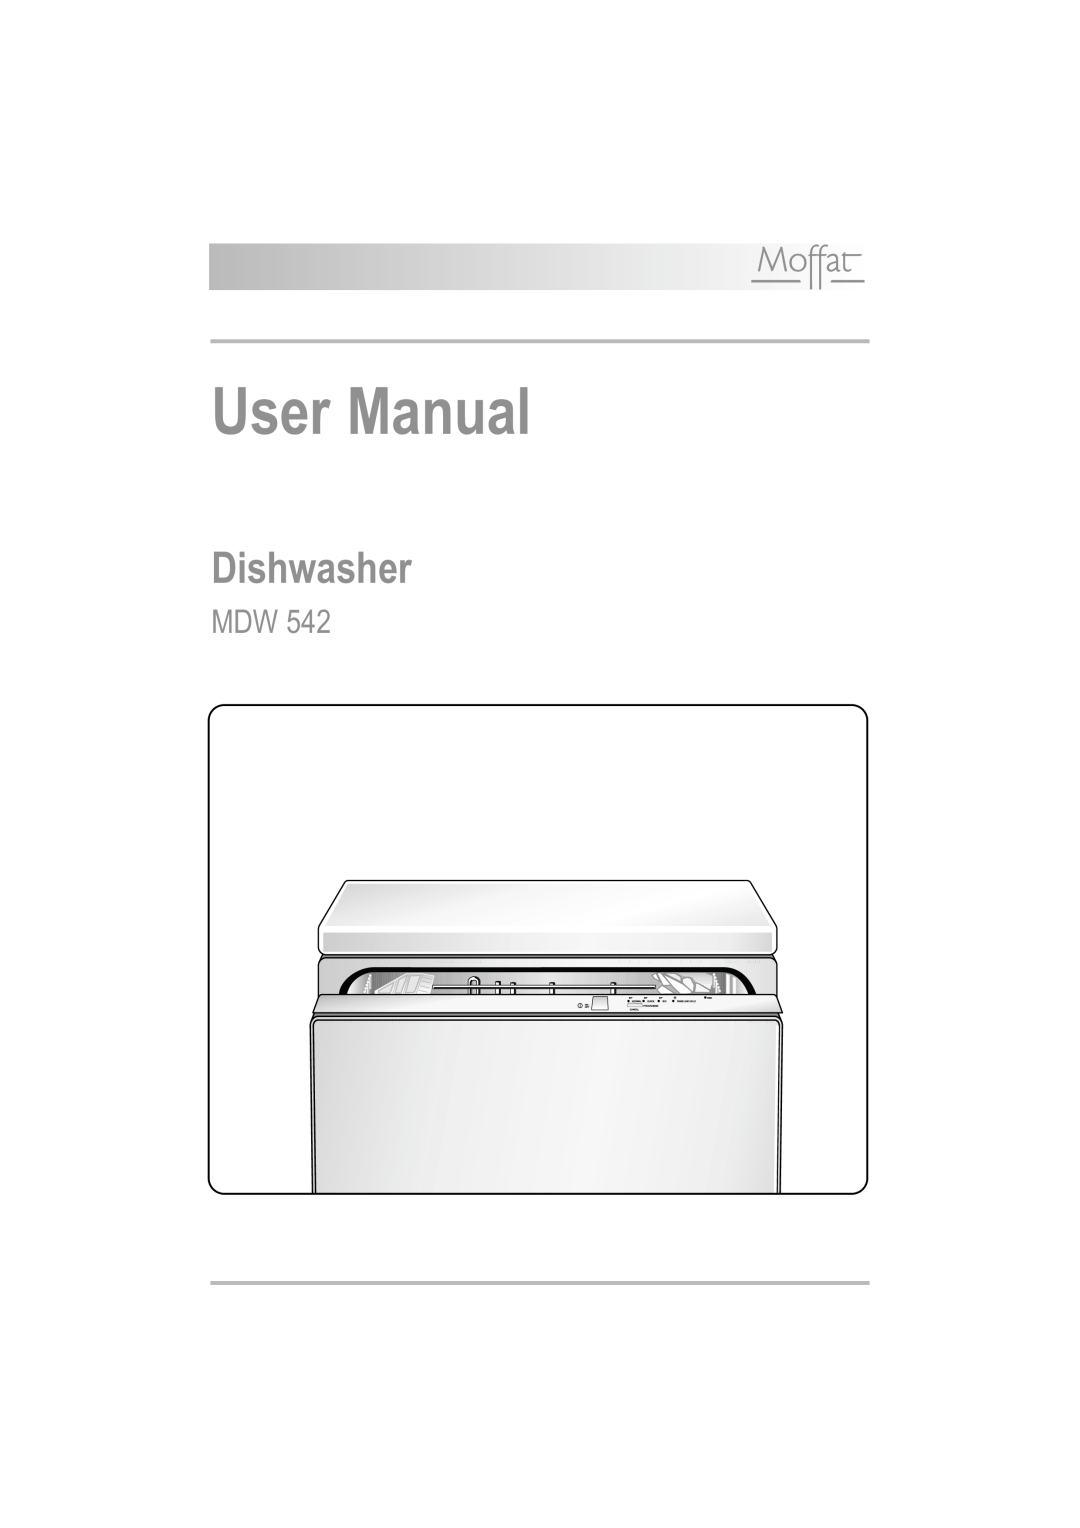 Moffat MDW 542 user manual User Manual, Dishwasher 